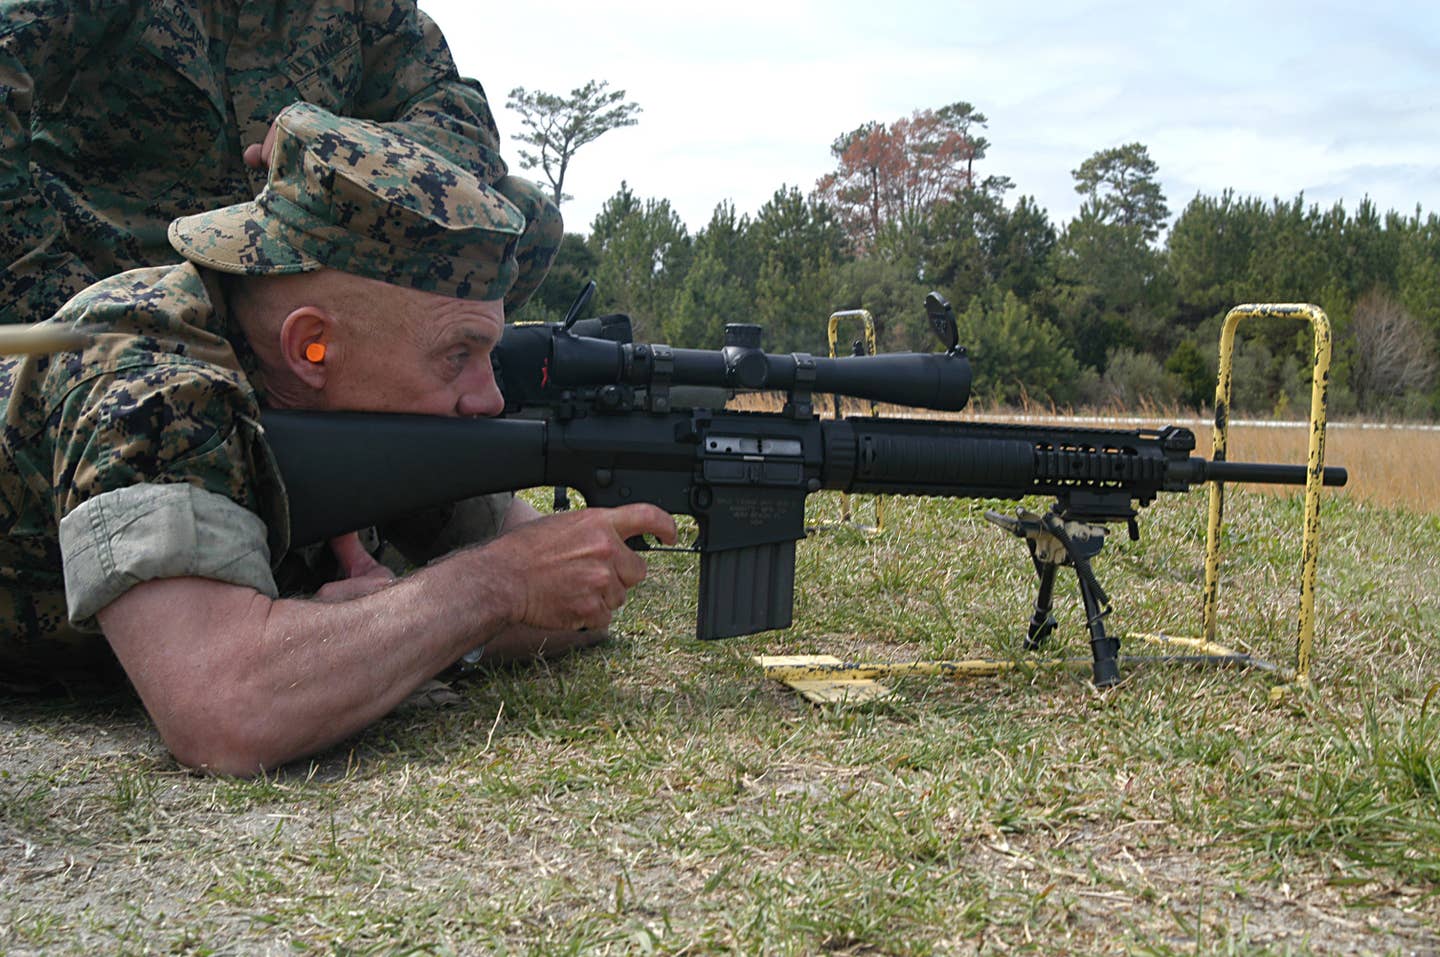 Mk 11 sniper rifle instead of M16